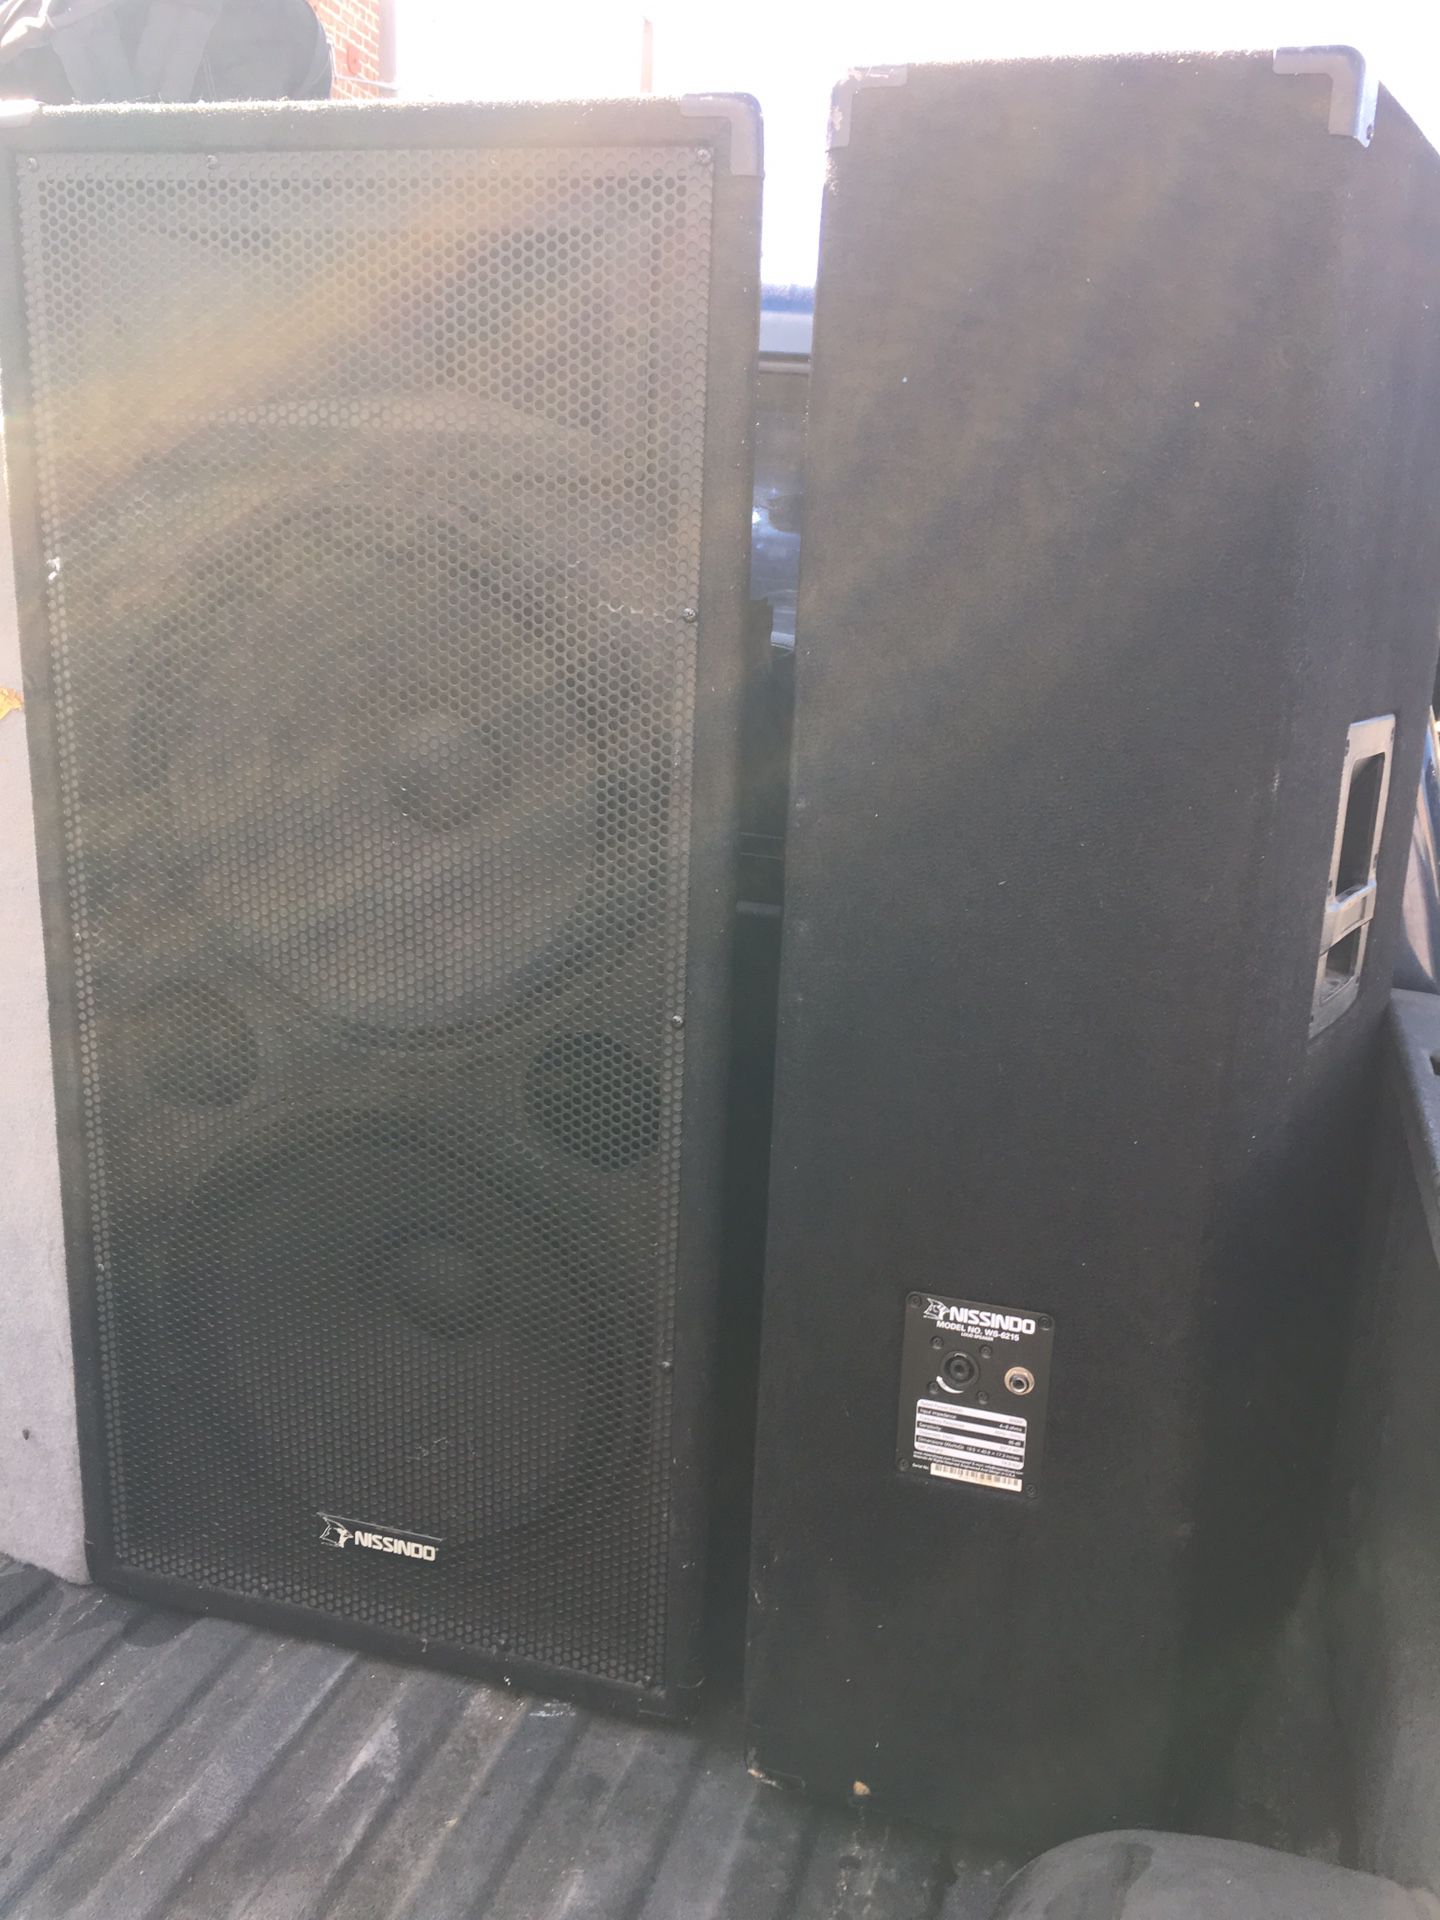 DJ equipment, speakers